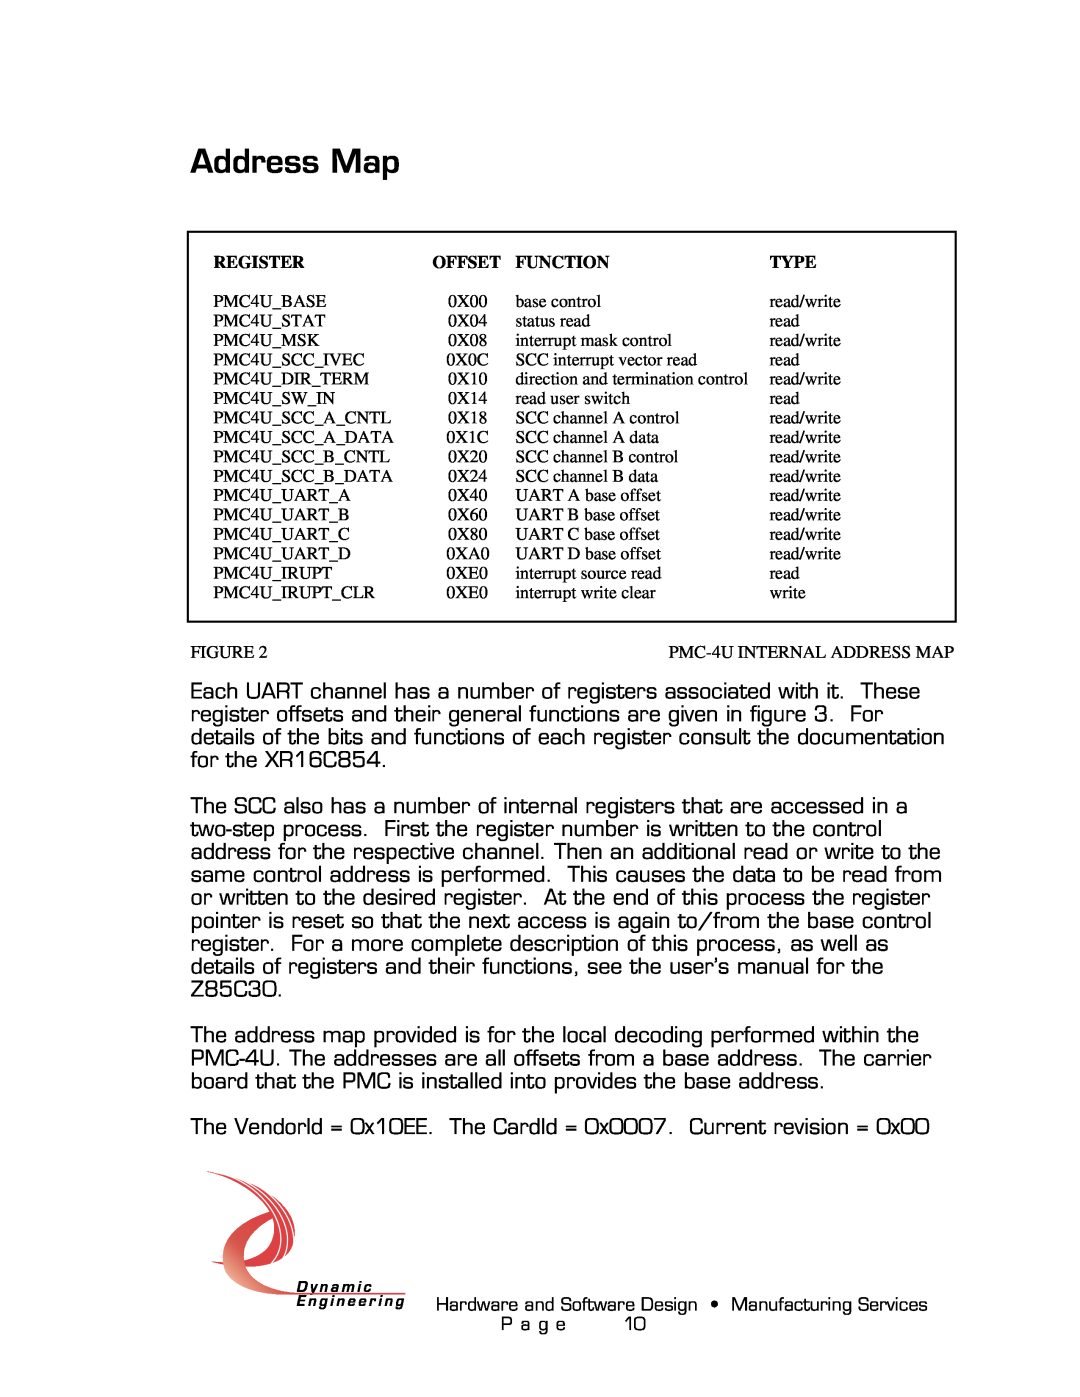 American Dynamics PMC-4U-CACI user manual Address Map 